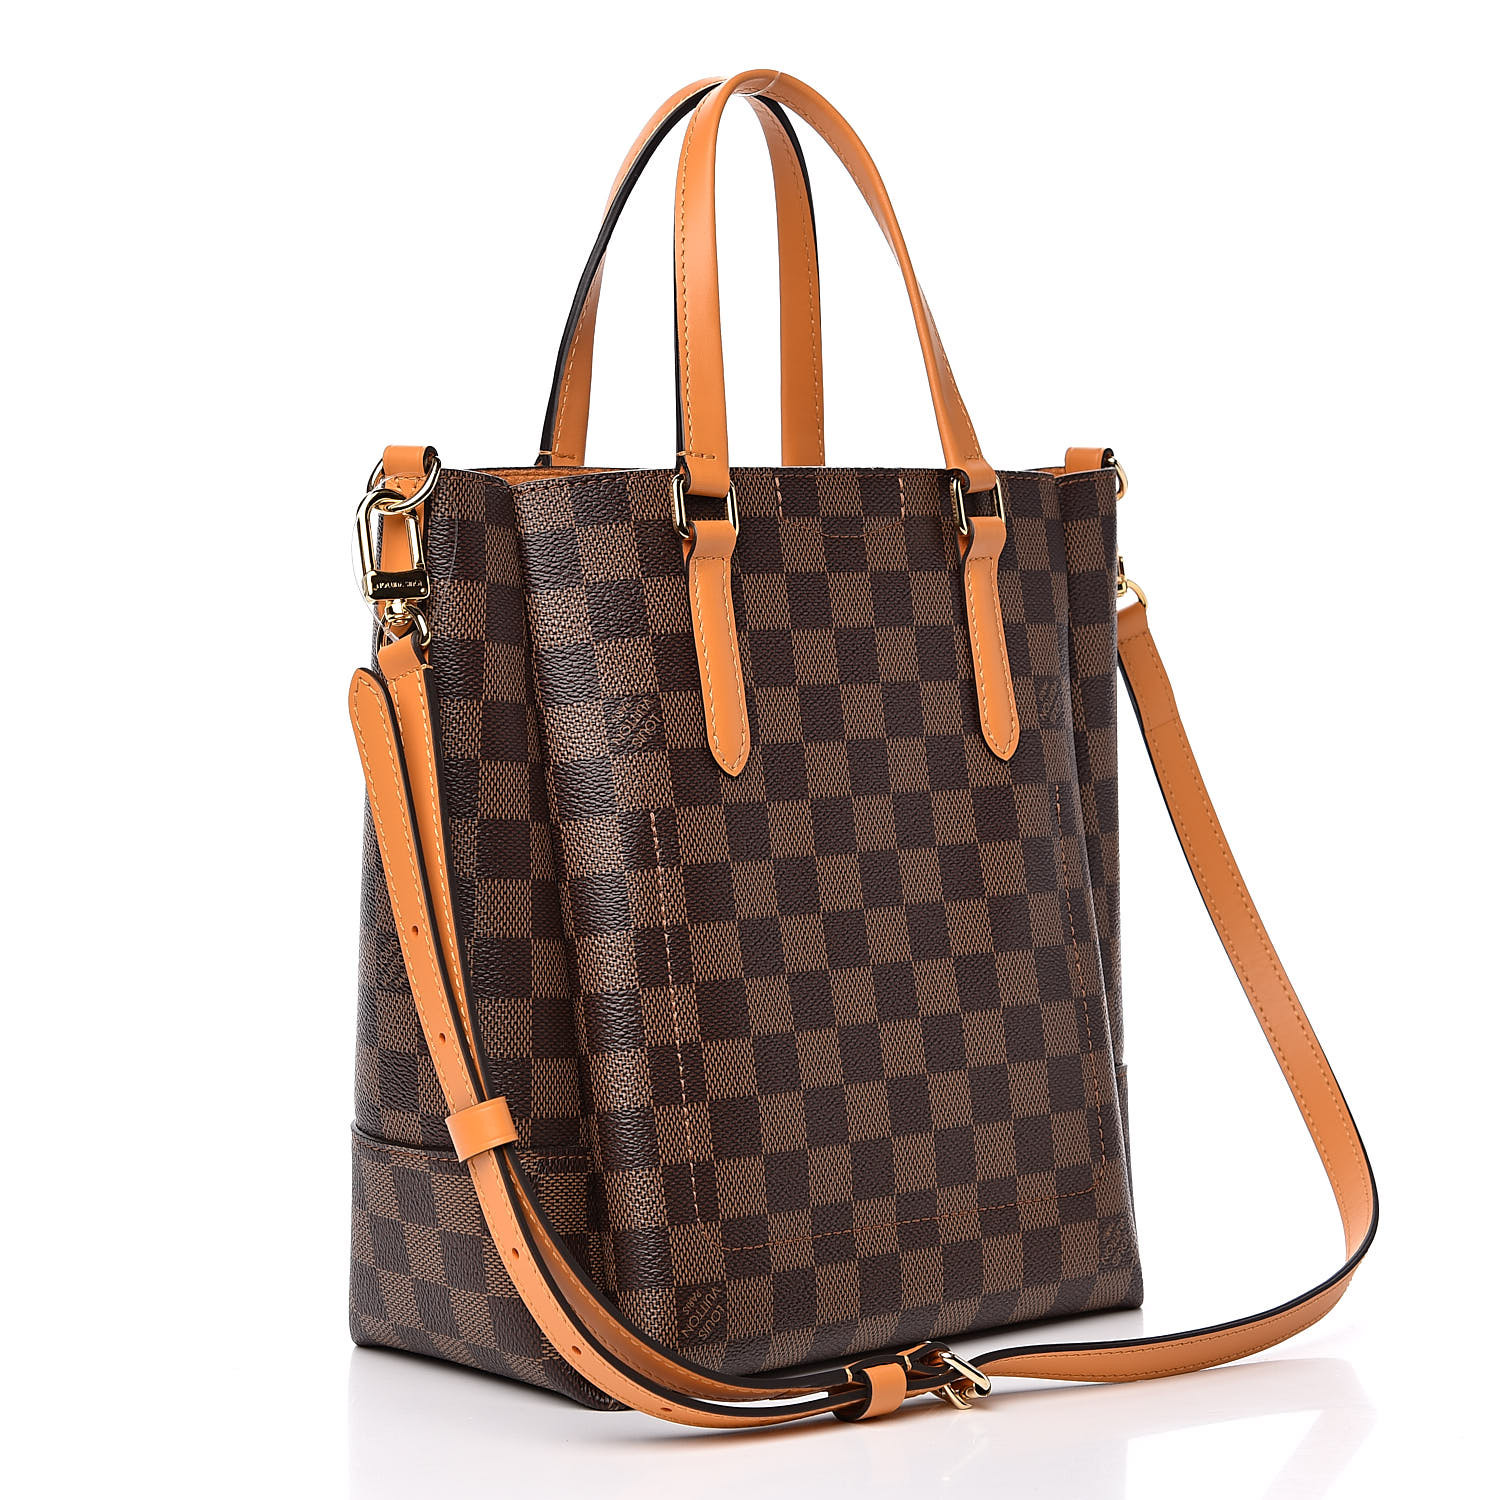 Louis Vuitton Belmont in Damier Ebene Handbag - Authentic Pre-Owned Designer Handbags